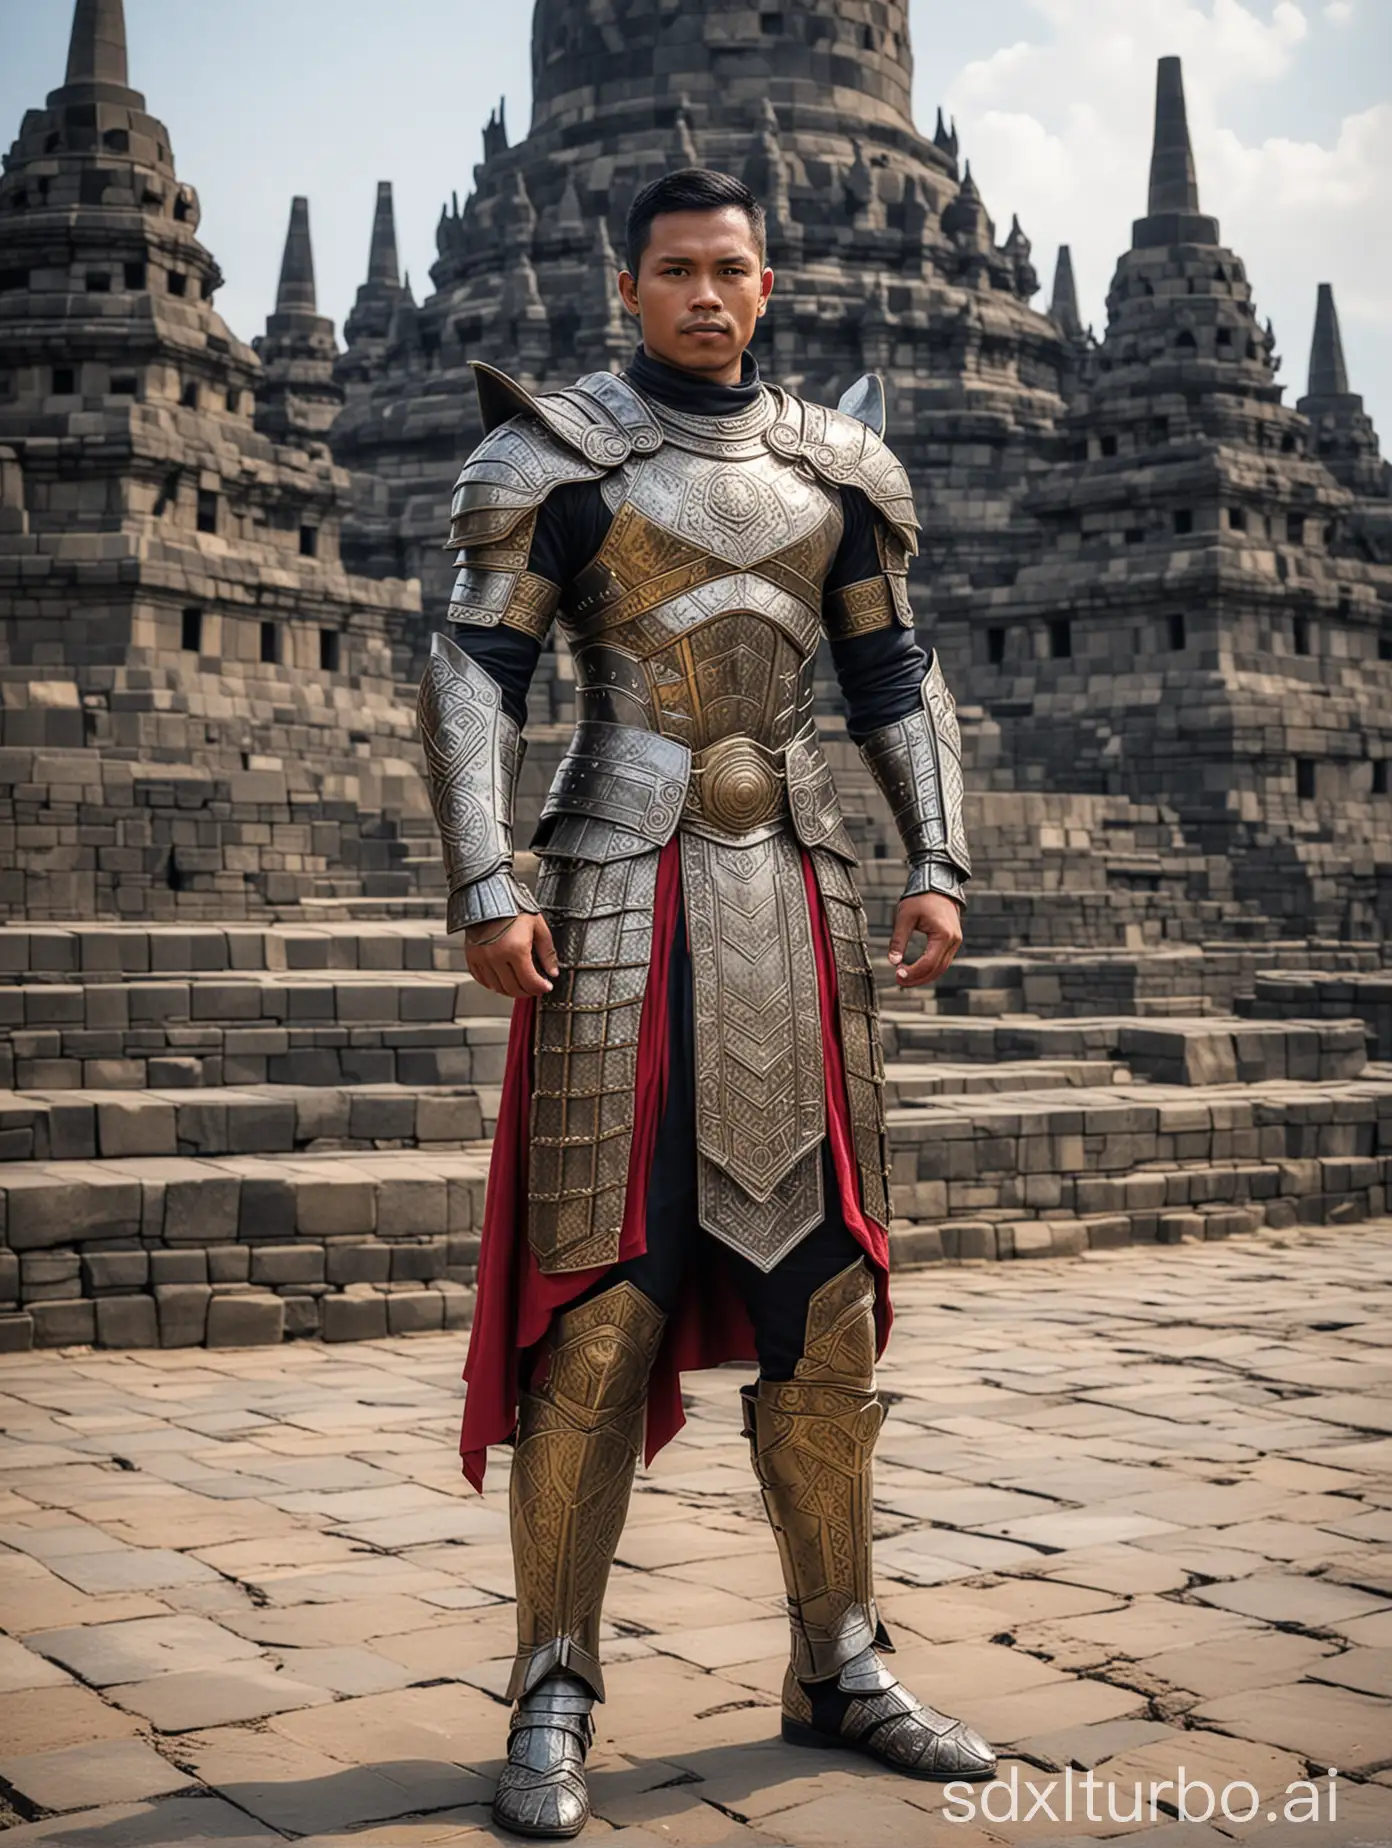 Create a superhero with Indonesian origin wearing armoured costume and he’s standing near borobudur